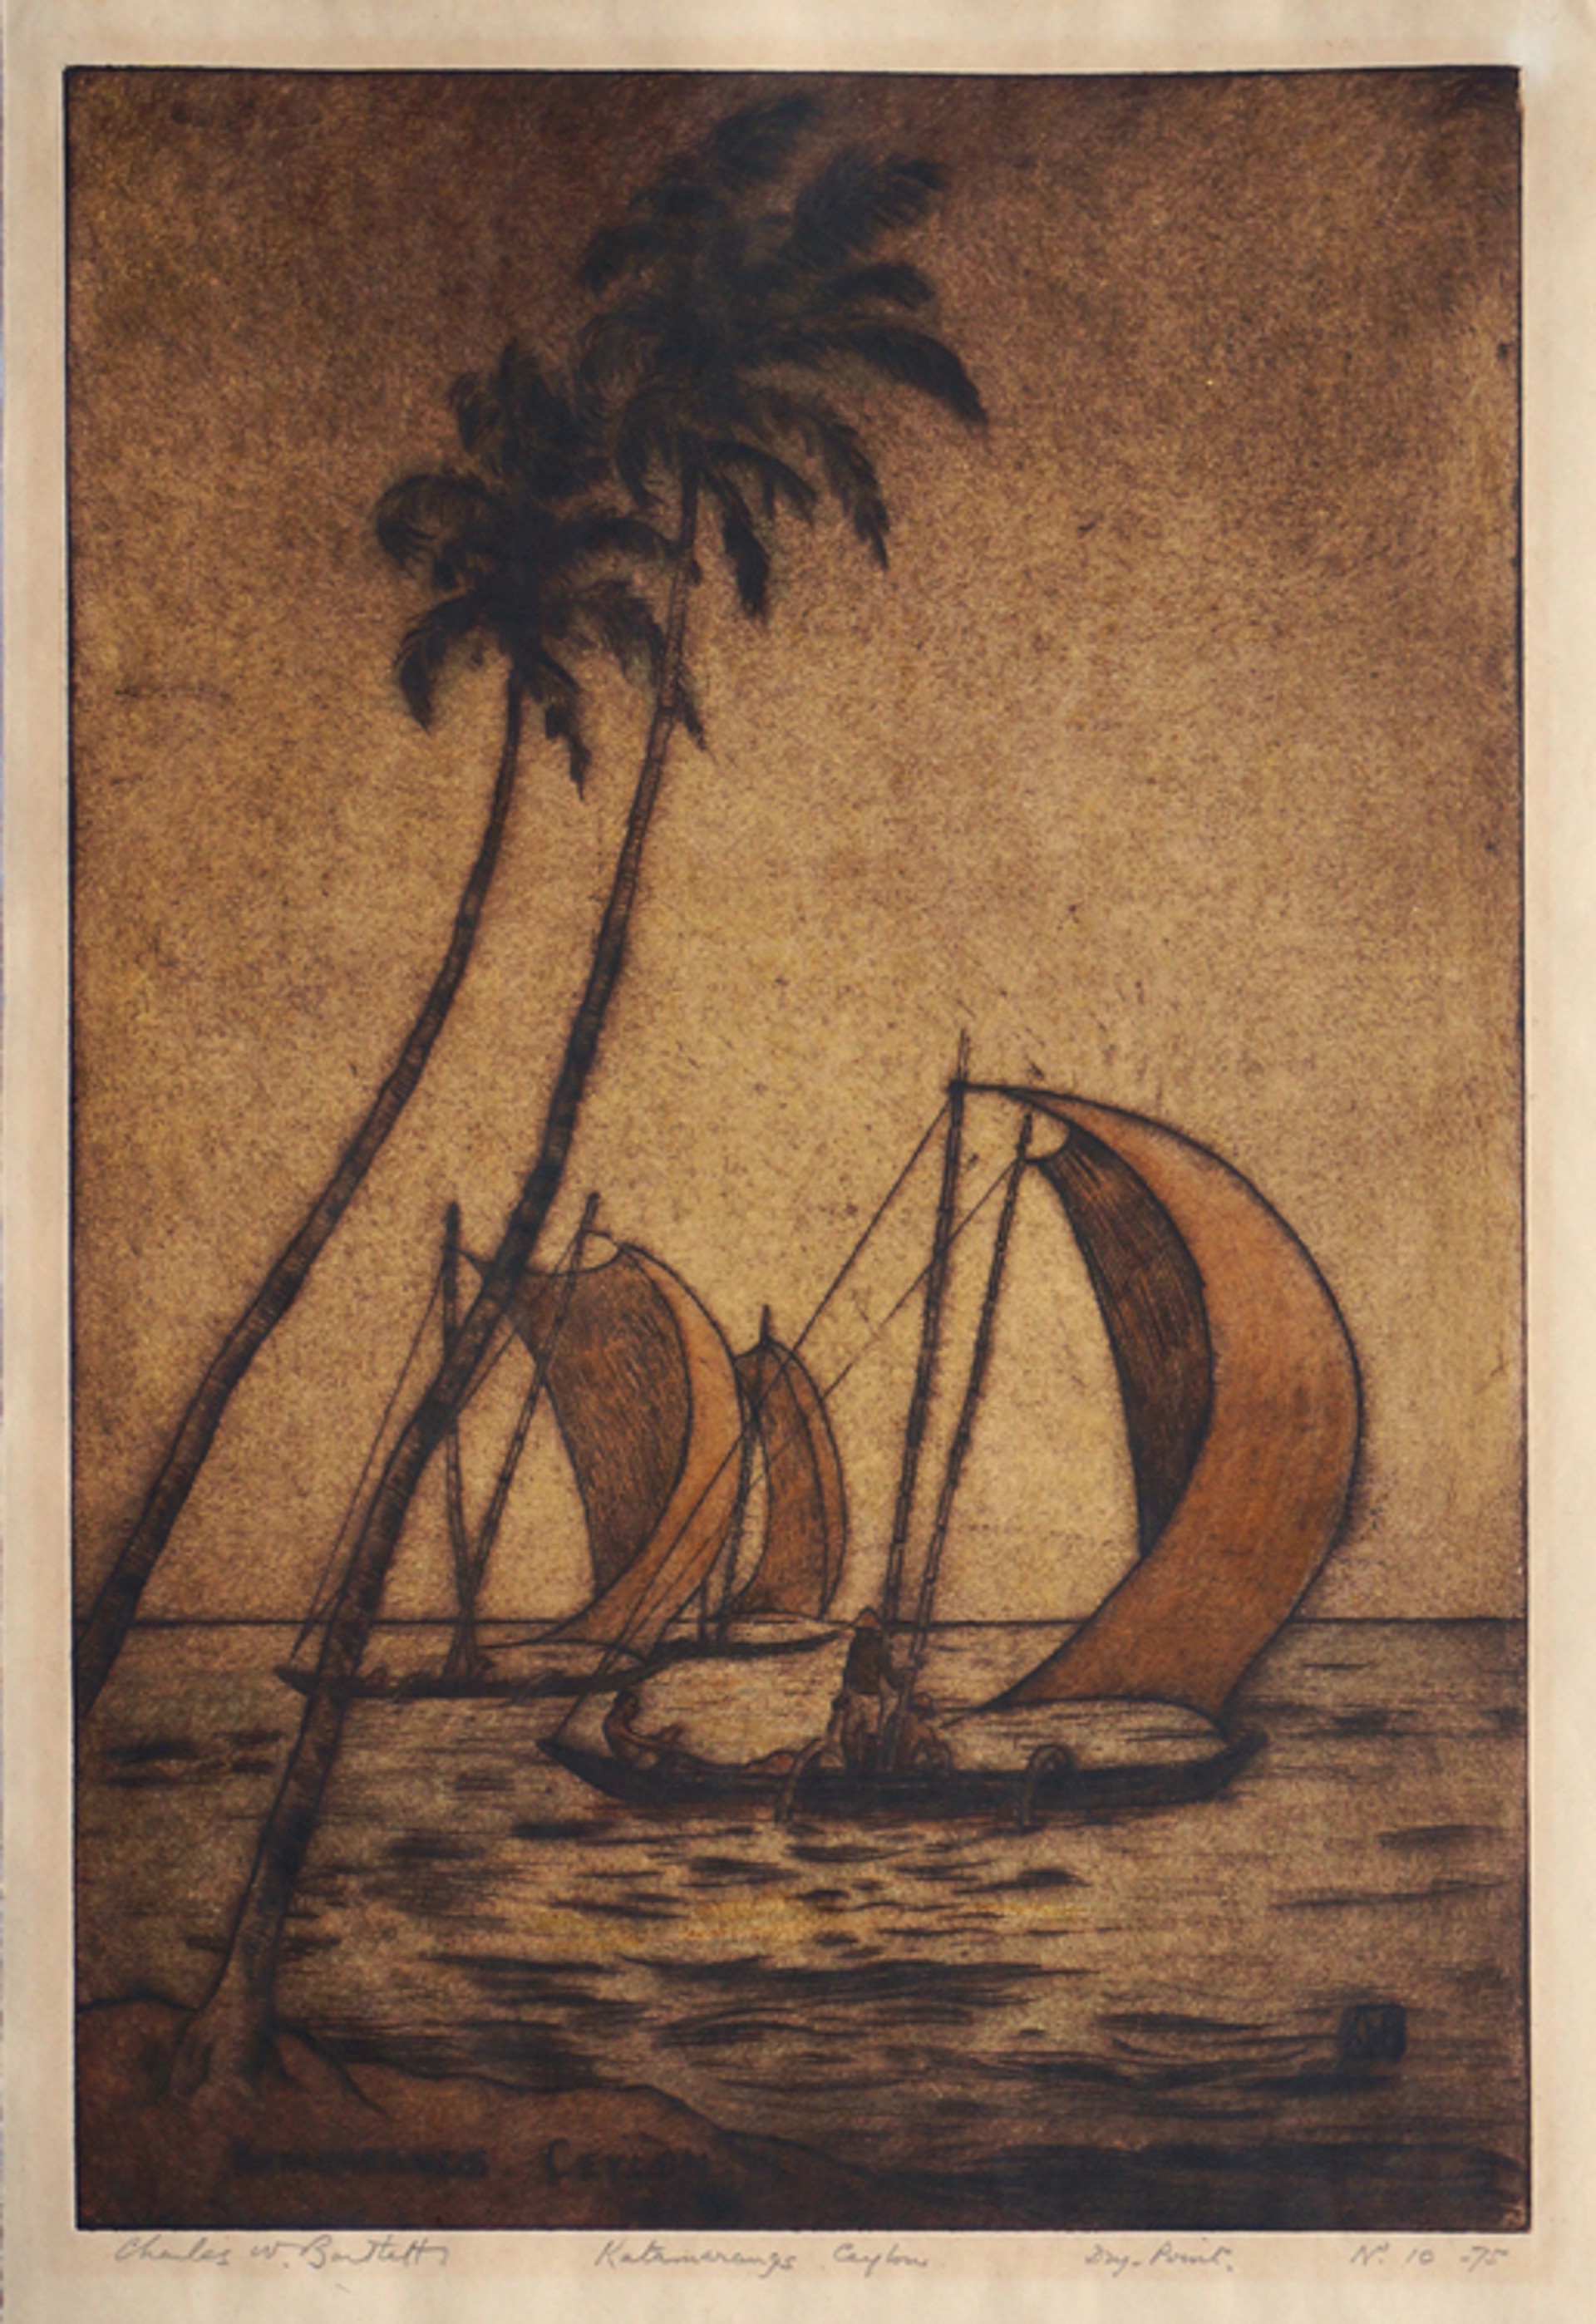 Katamarangs, Ceylon by Charles Bartlett